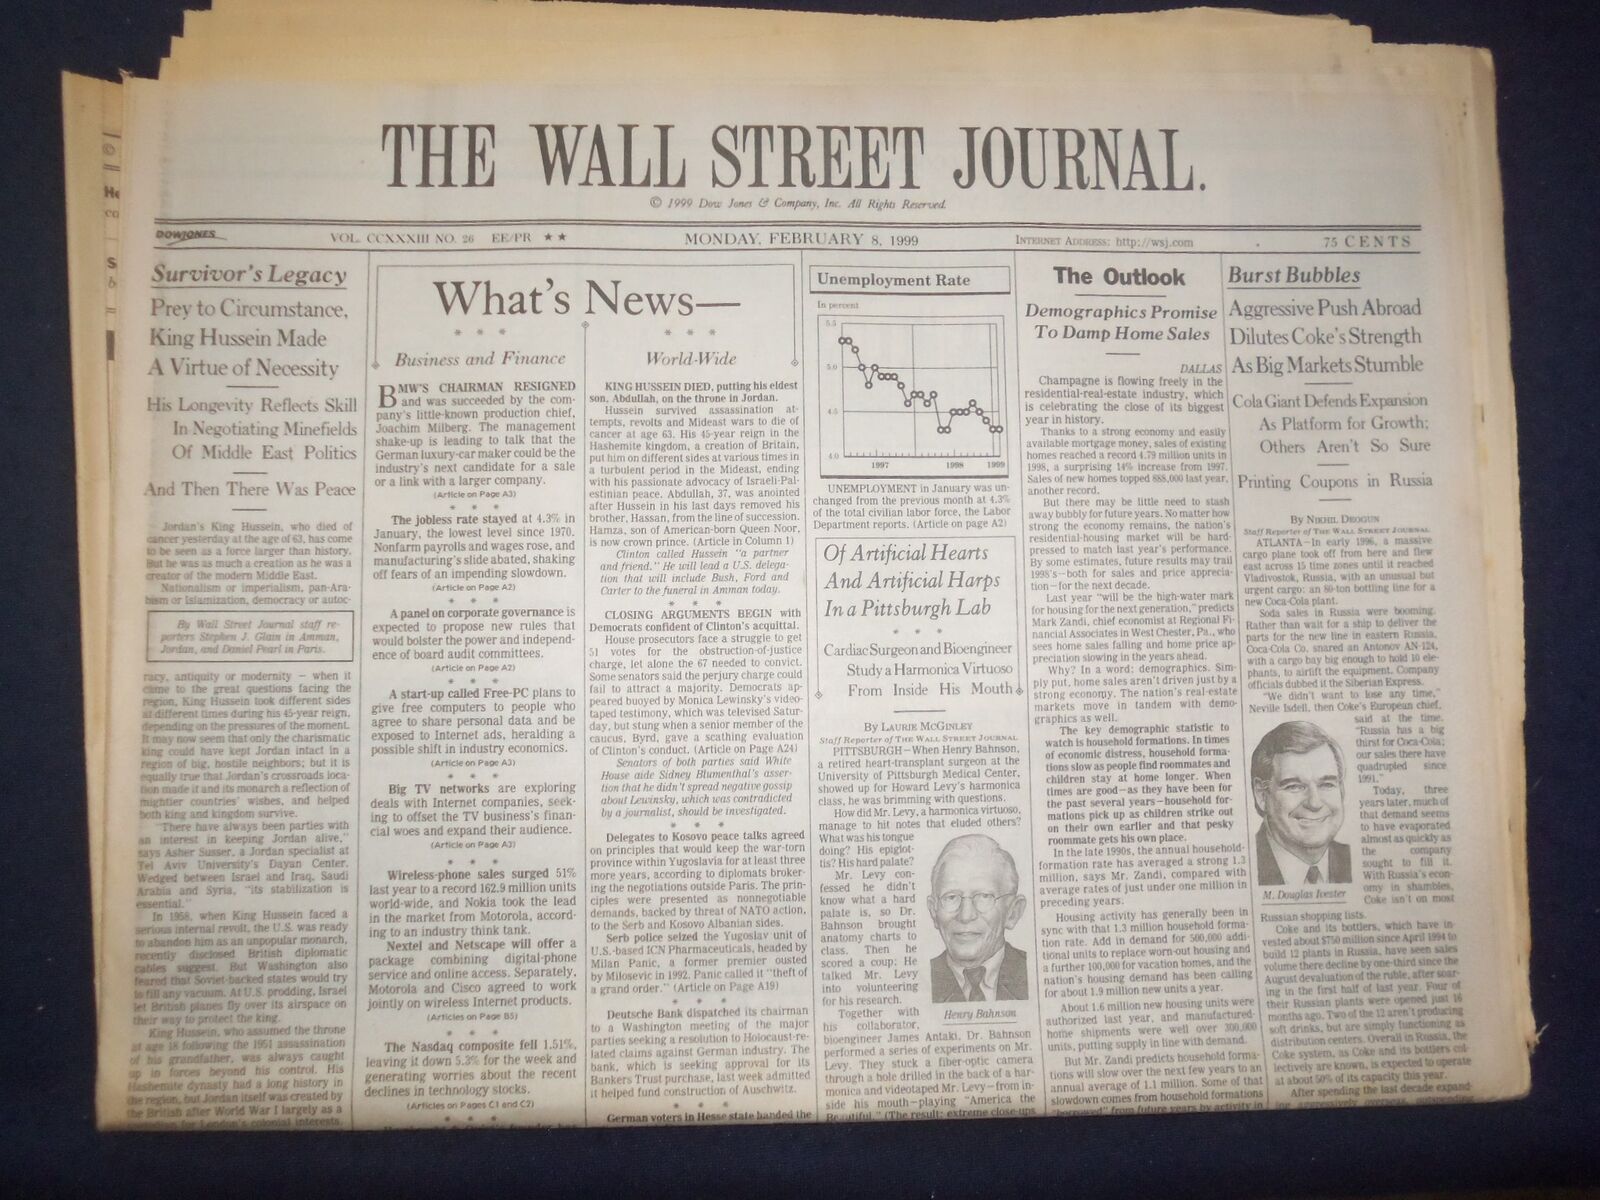 1999 FEB 8 THE WALL STREET JOURNAL - KING HUSSEIN MADE VITURE NECESSITY - WJ 308